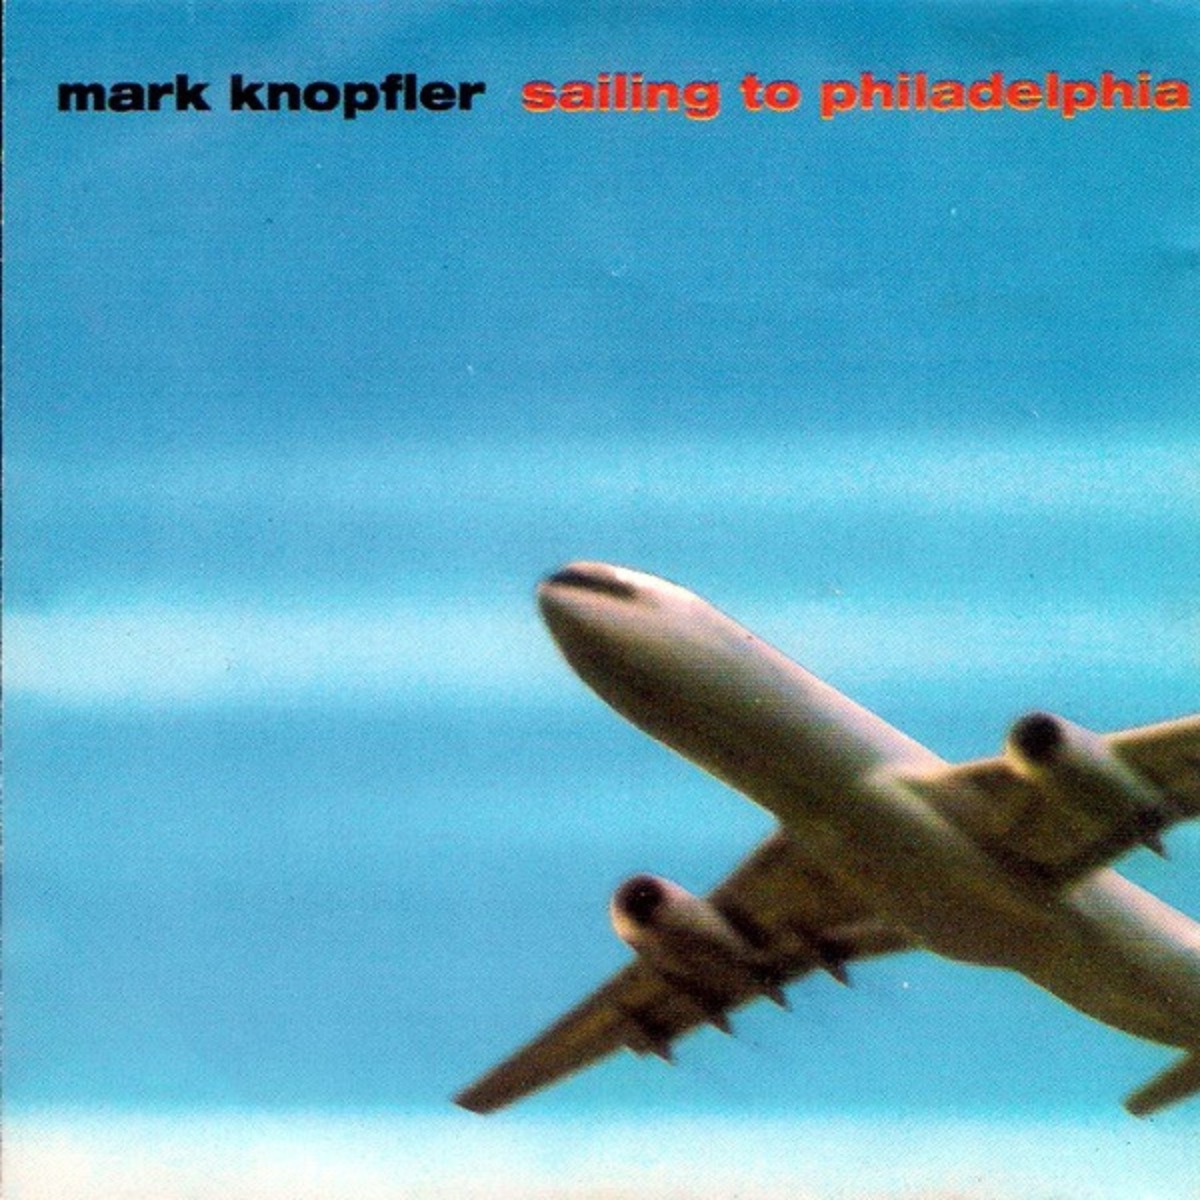 Cover des Albums "Sailing to Philadelphia" von Mark Knopfler